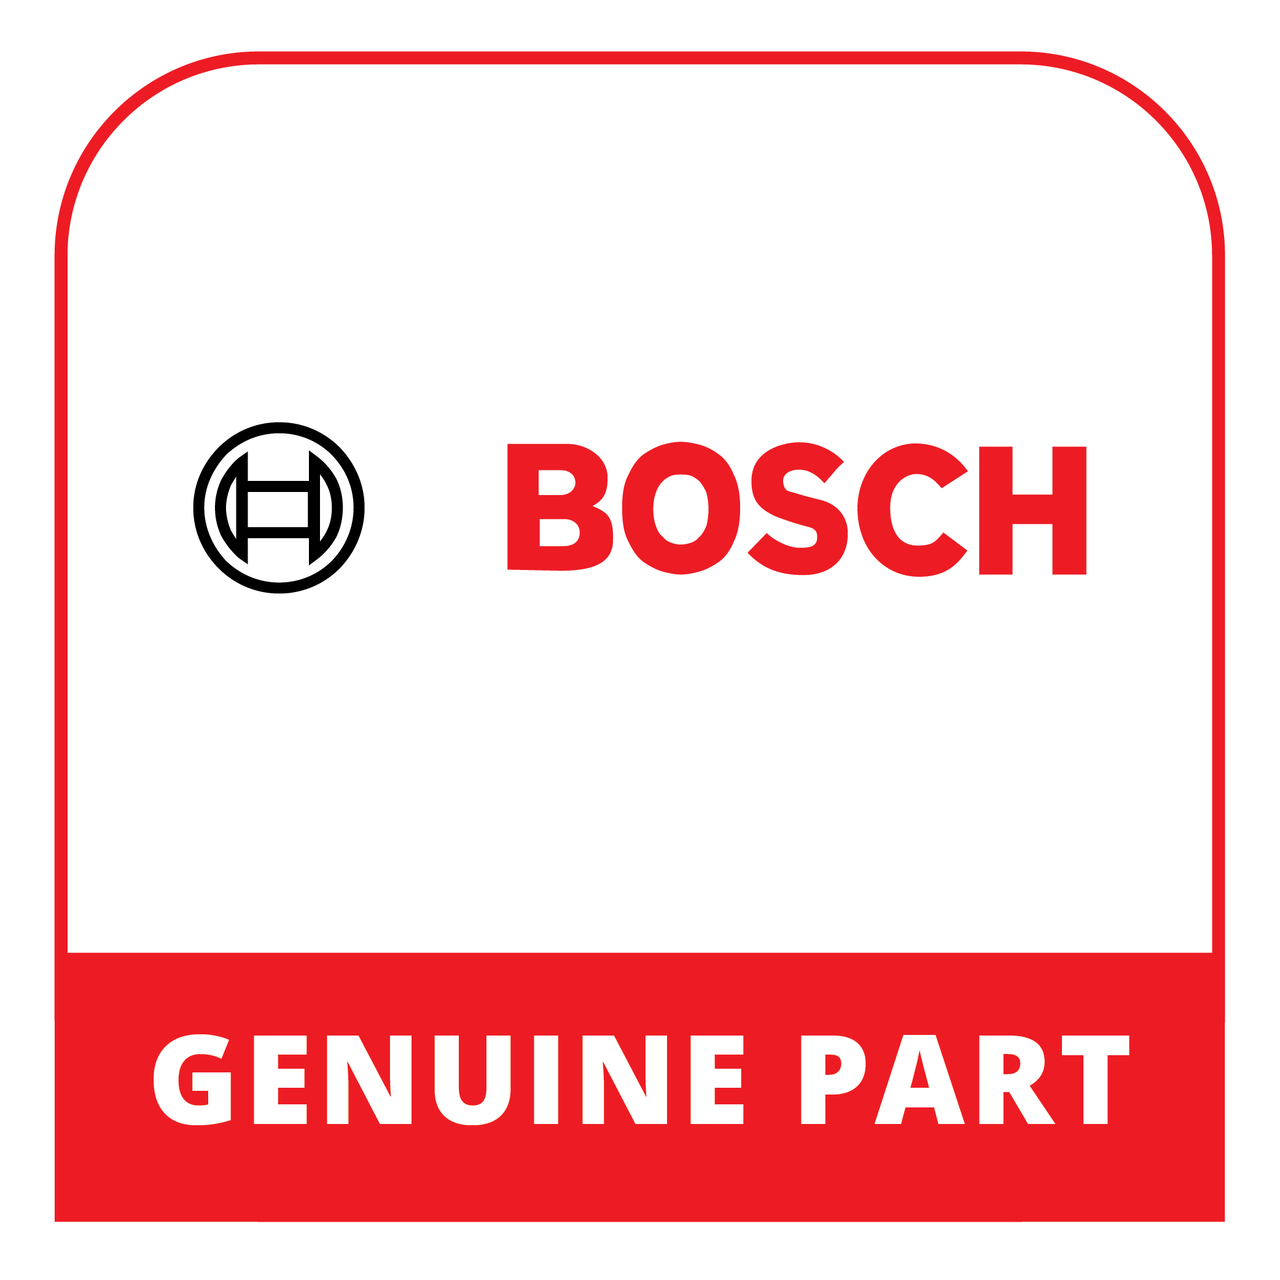 Bosch (Thermador) 23002509 - Glass Ceramic Hob Top - Genuine Bosch (Thermador) Part